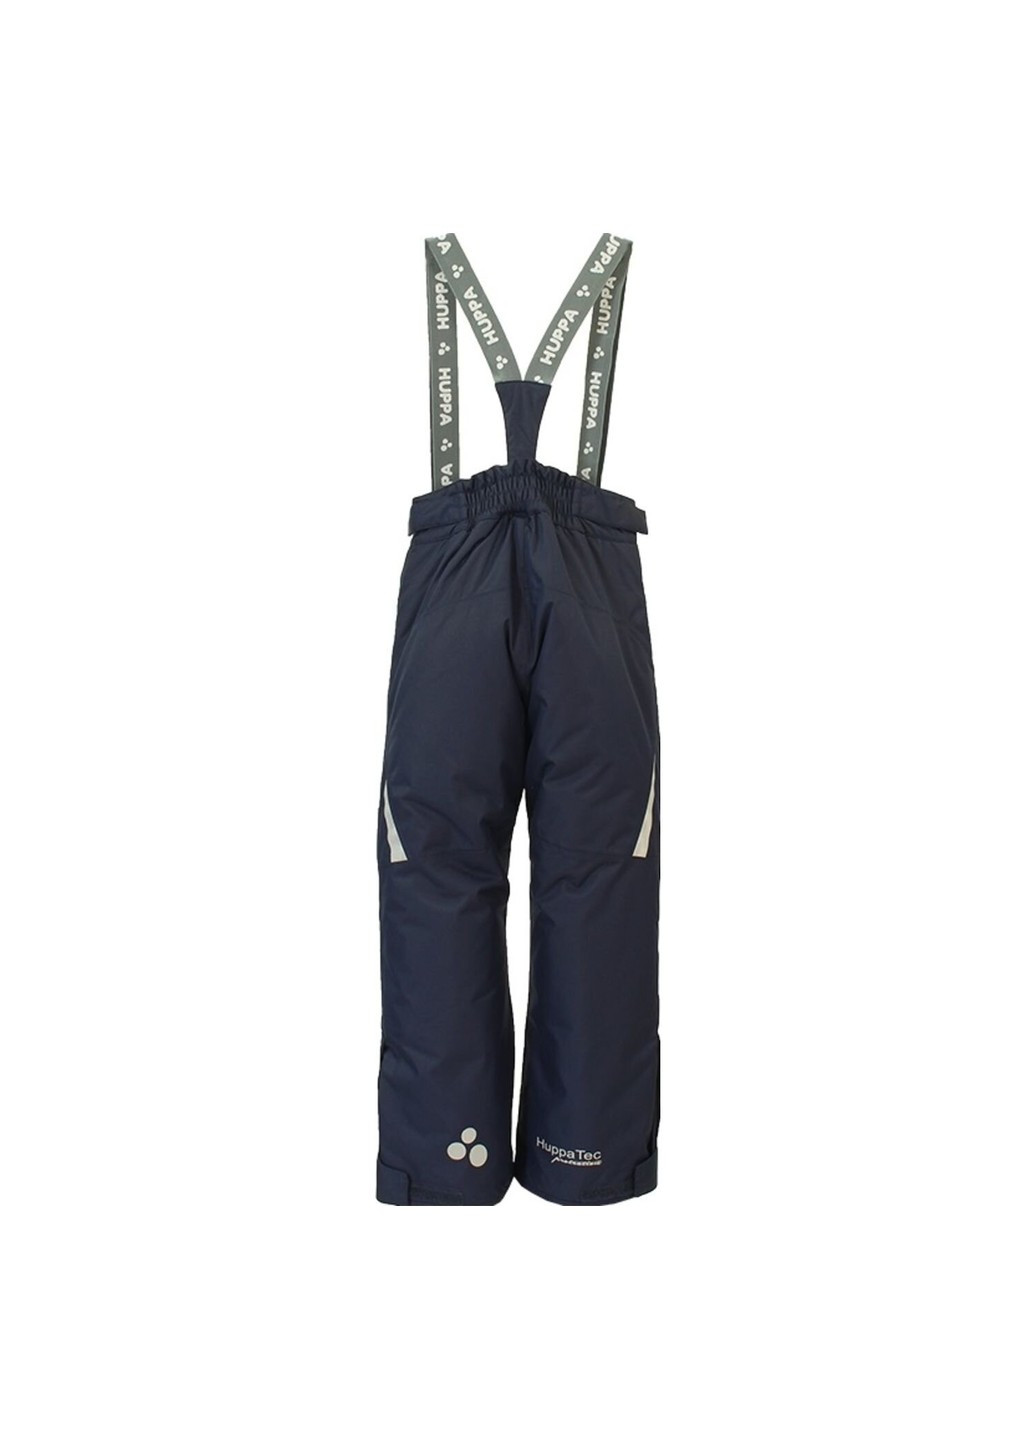 Синий зимний комплект лыжный (куртка + брюки) hansen Huppa